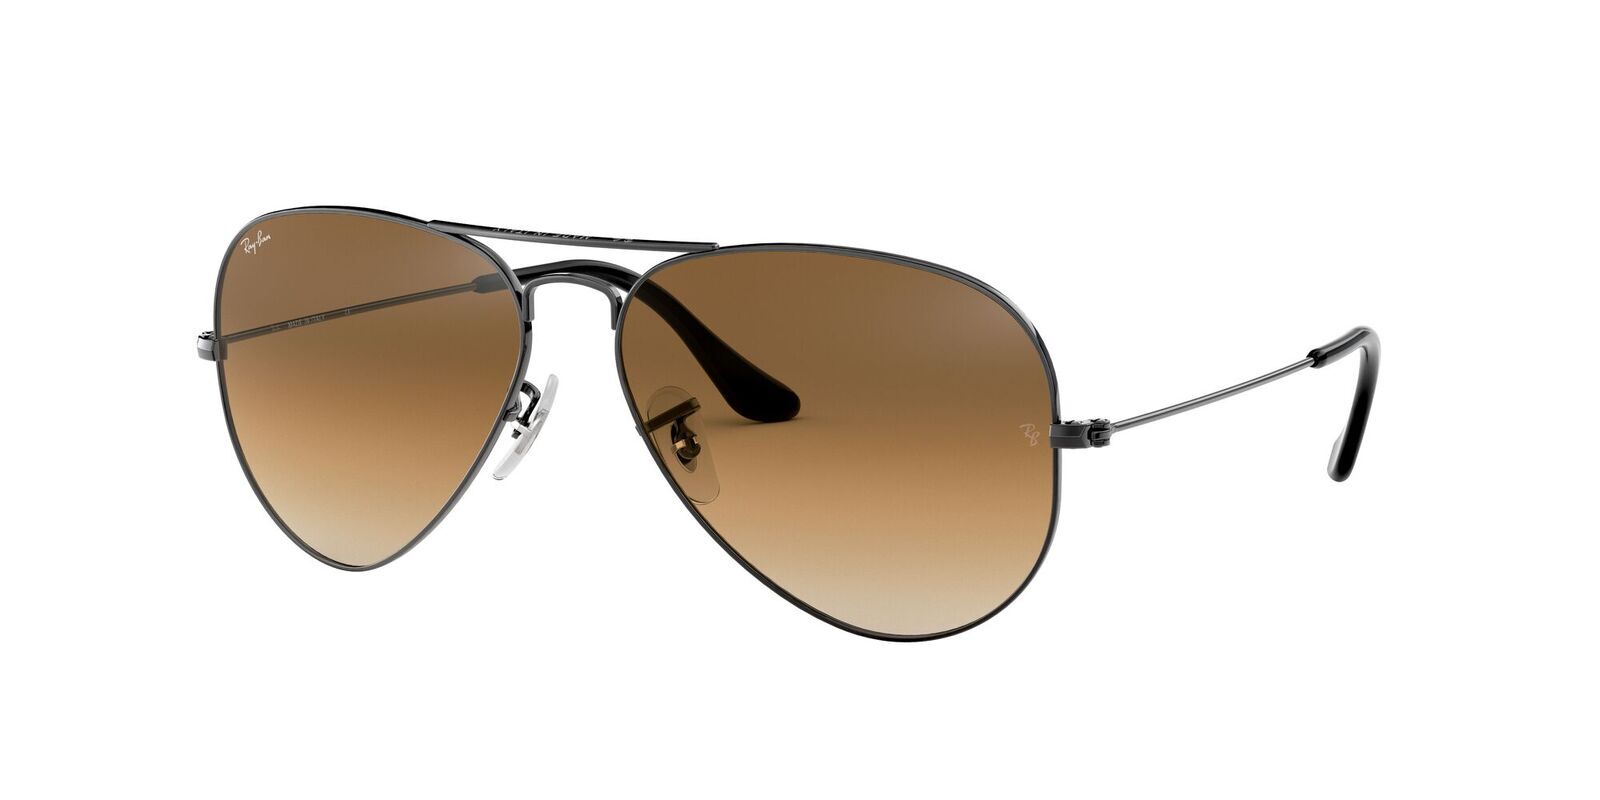 Sunglasses | Aviator Gold Brown Gradient Sunglasses | Ray-Ban